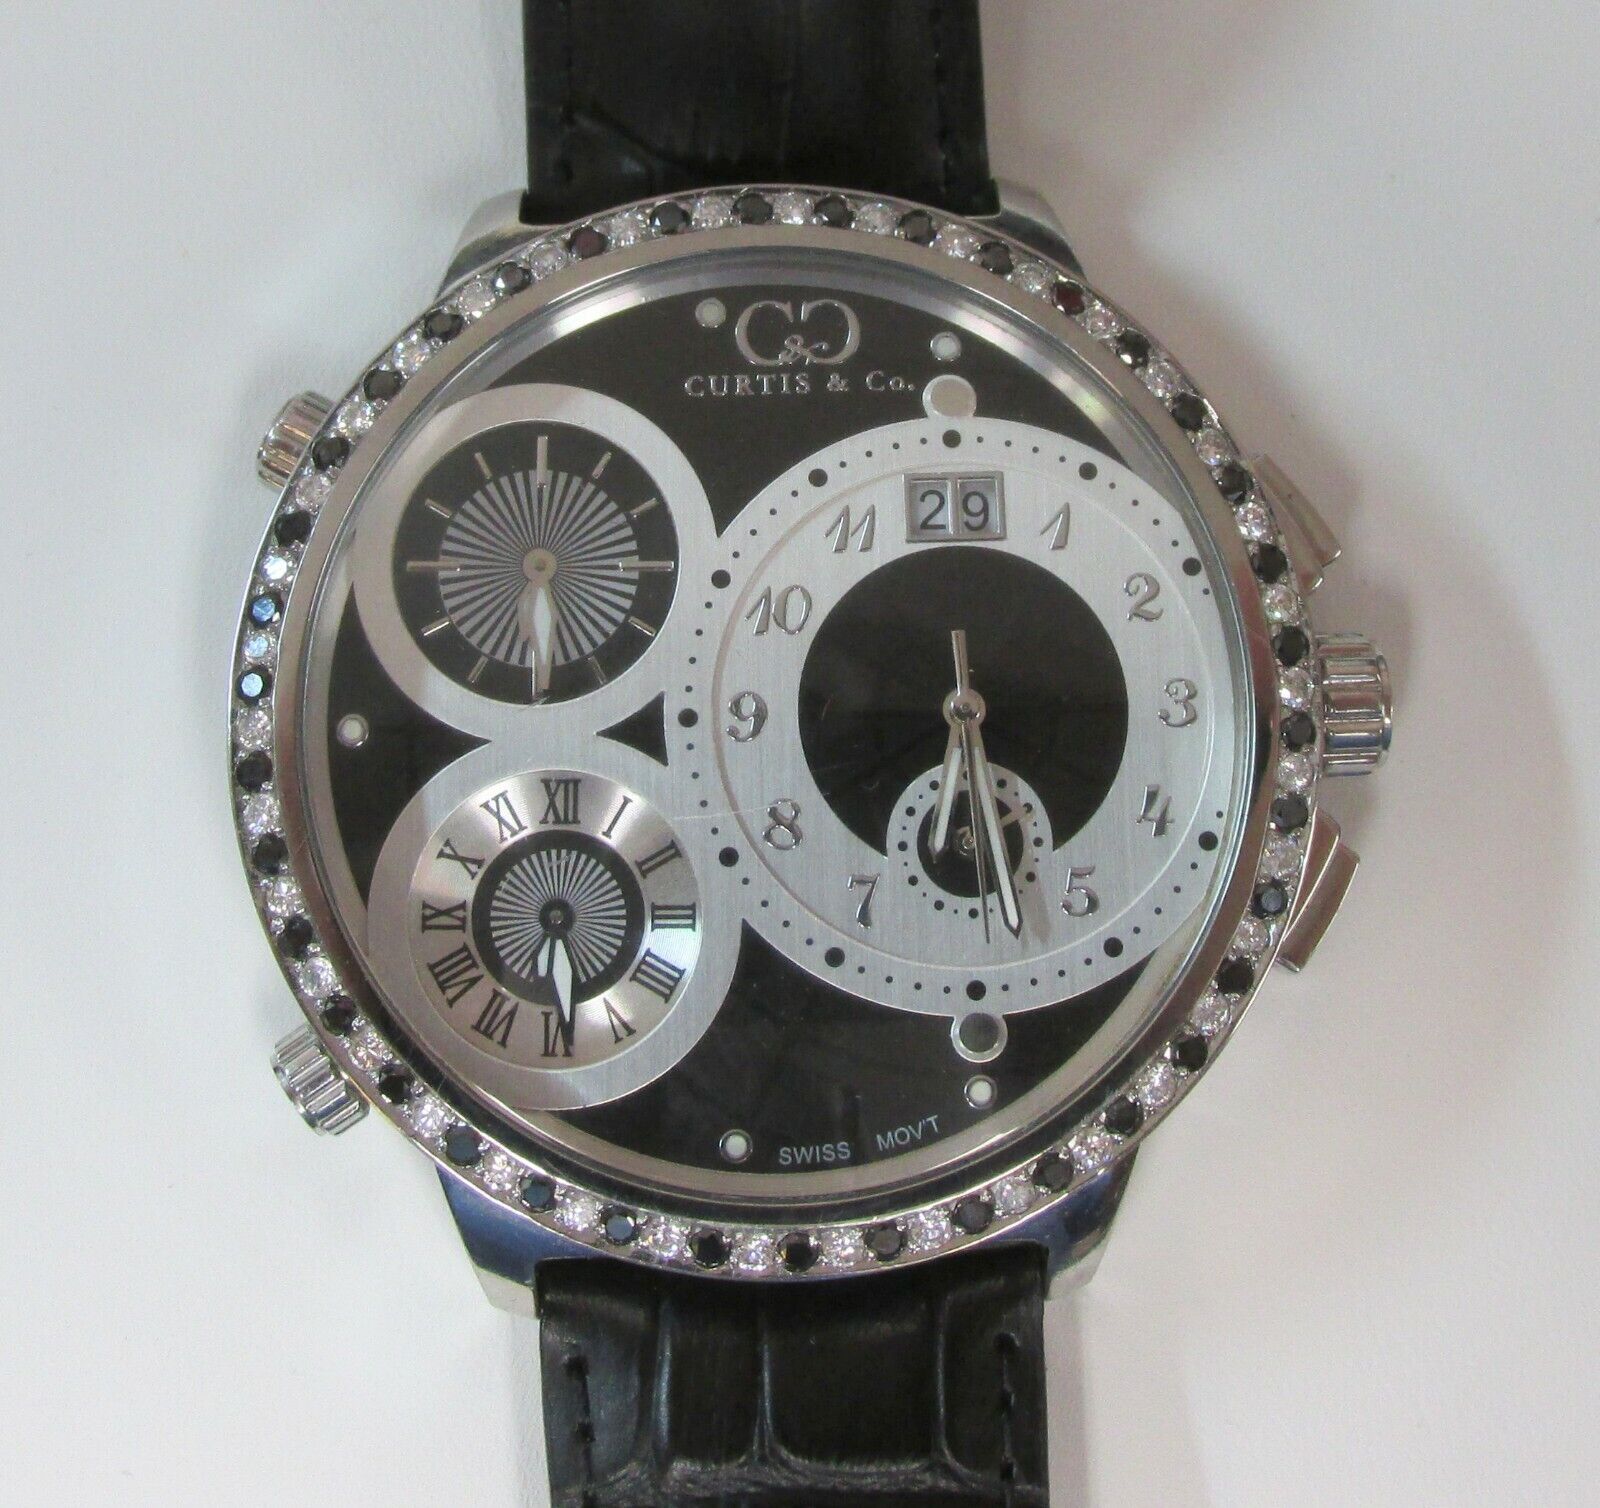 Curtis & Co. Big World Time 4 Time Zone Wristwatch